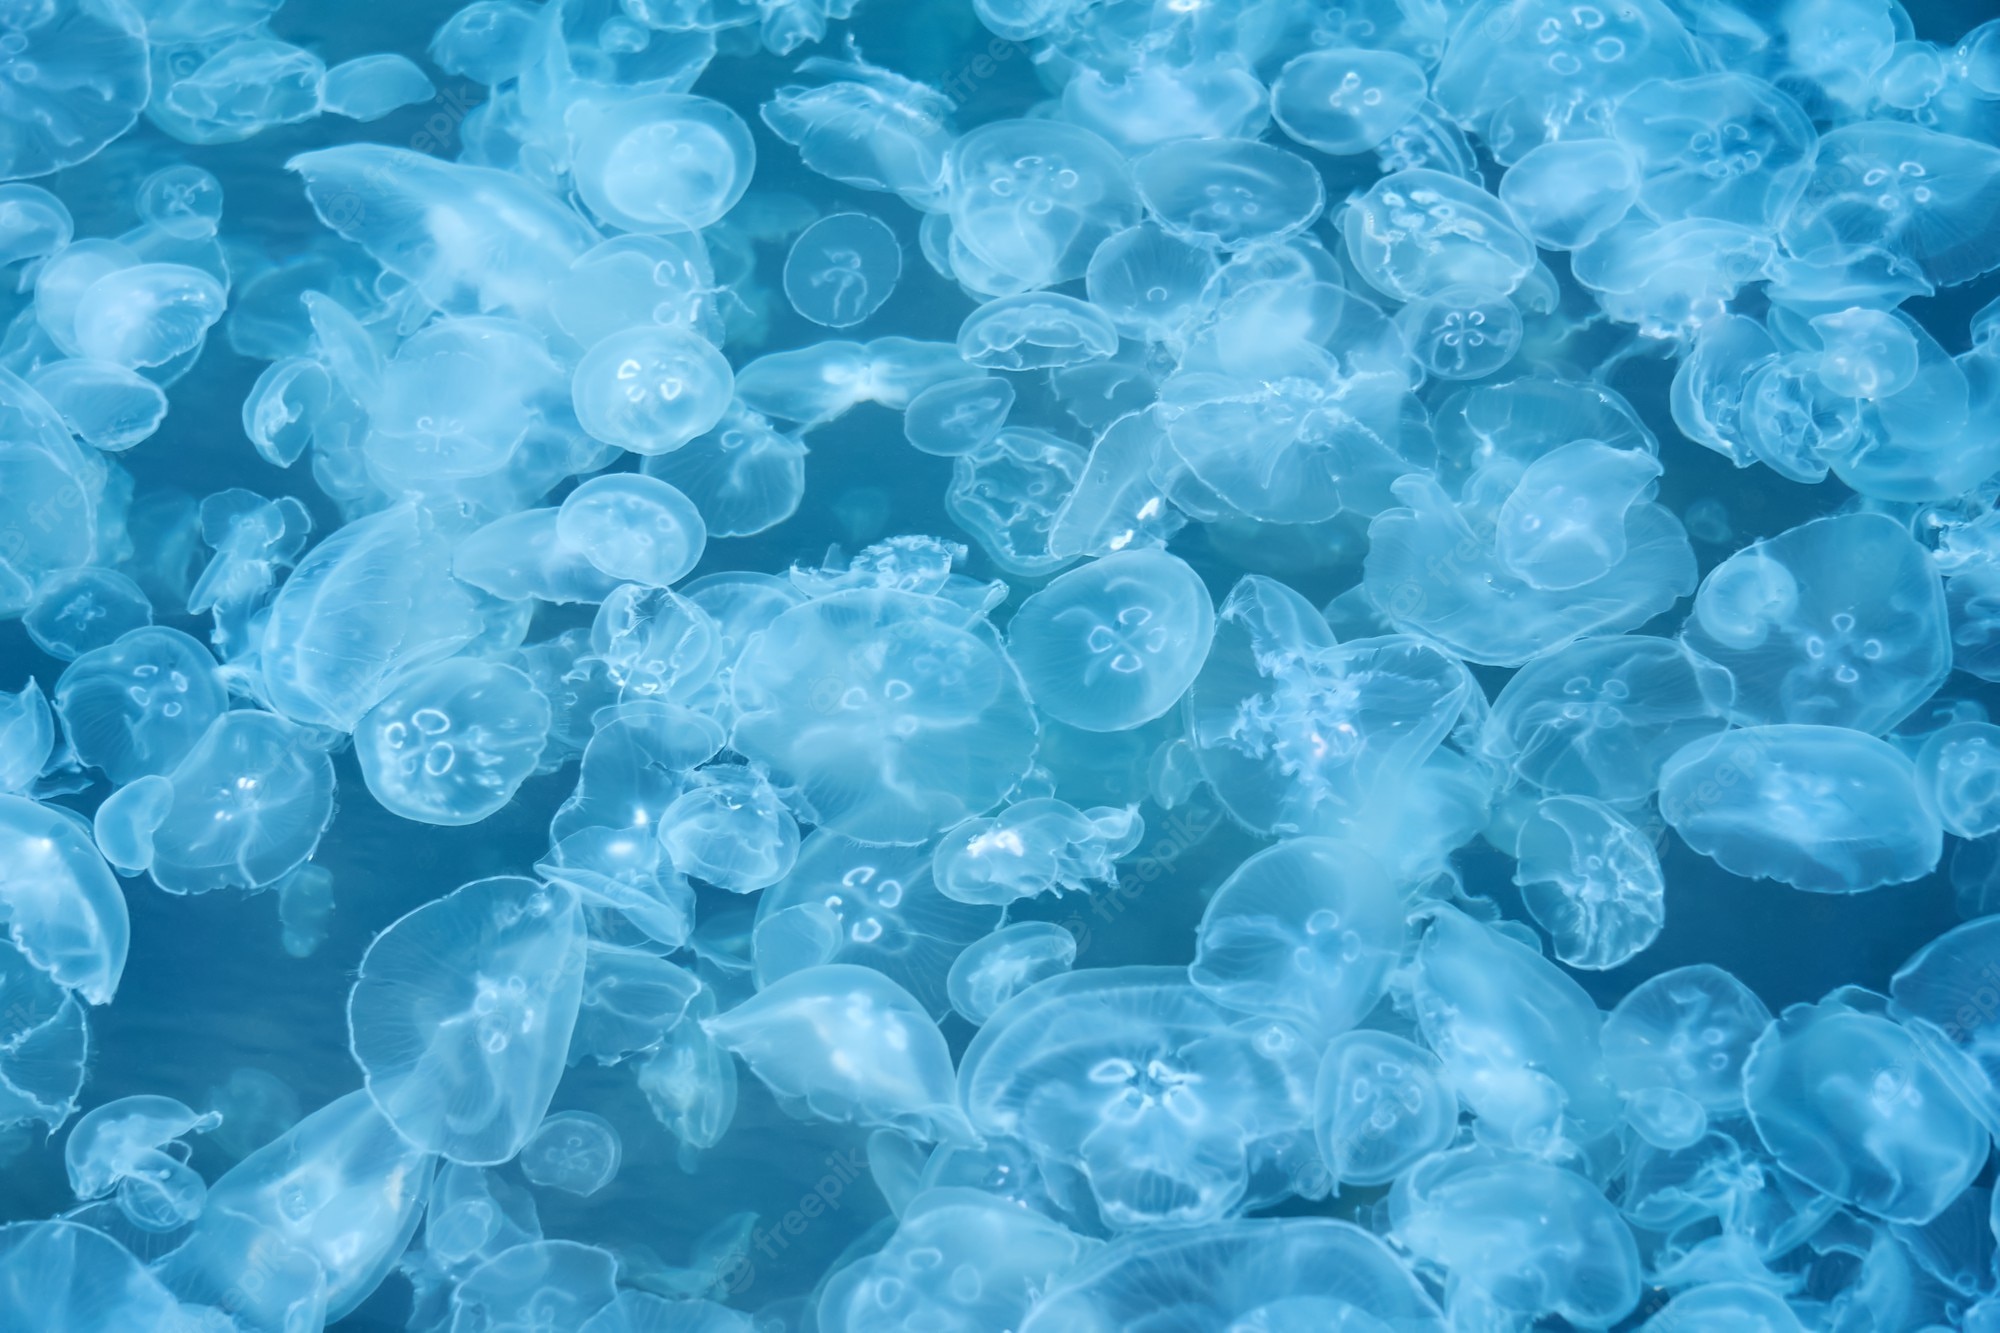 Moon Jellyfish Image. Free Vectors, & PSD